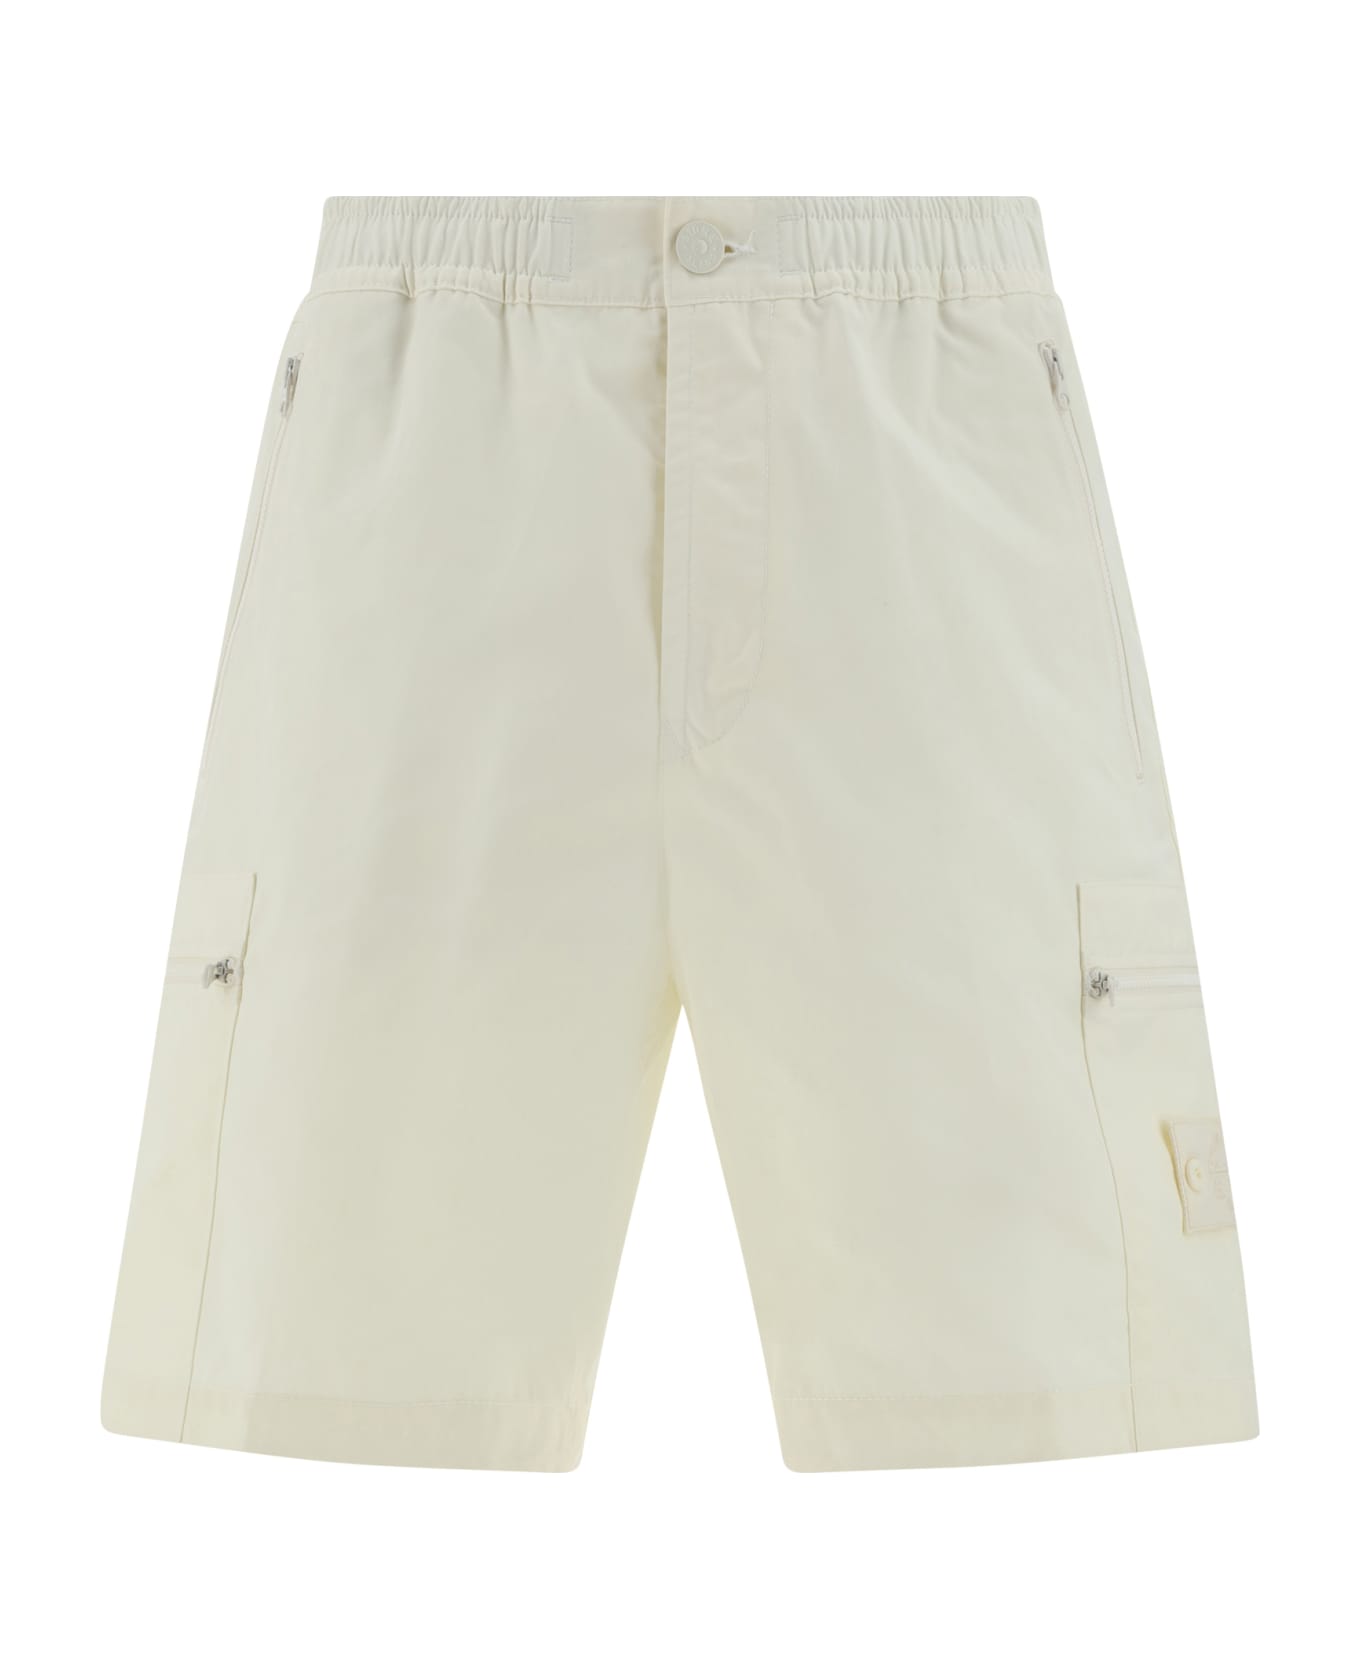 Stone Island Cargo Bermuda Shorts - White ショートパンツ